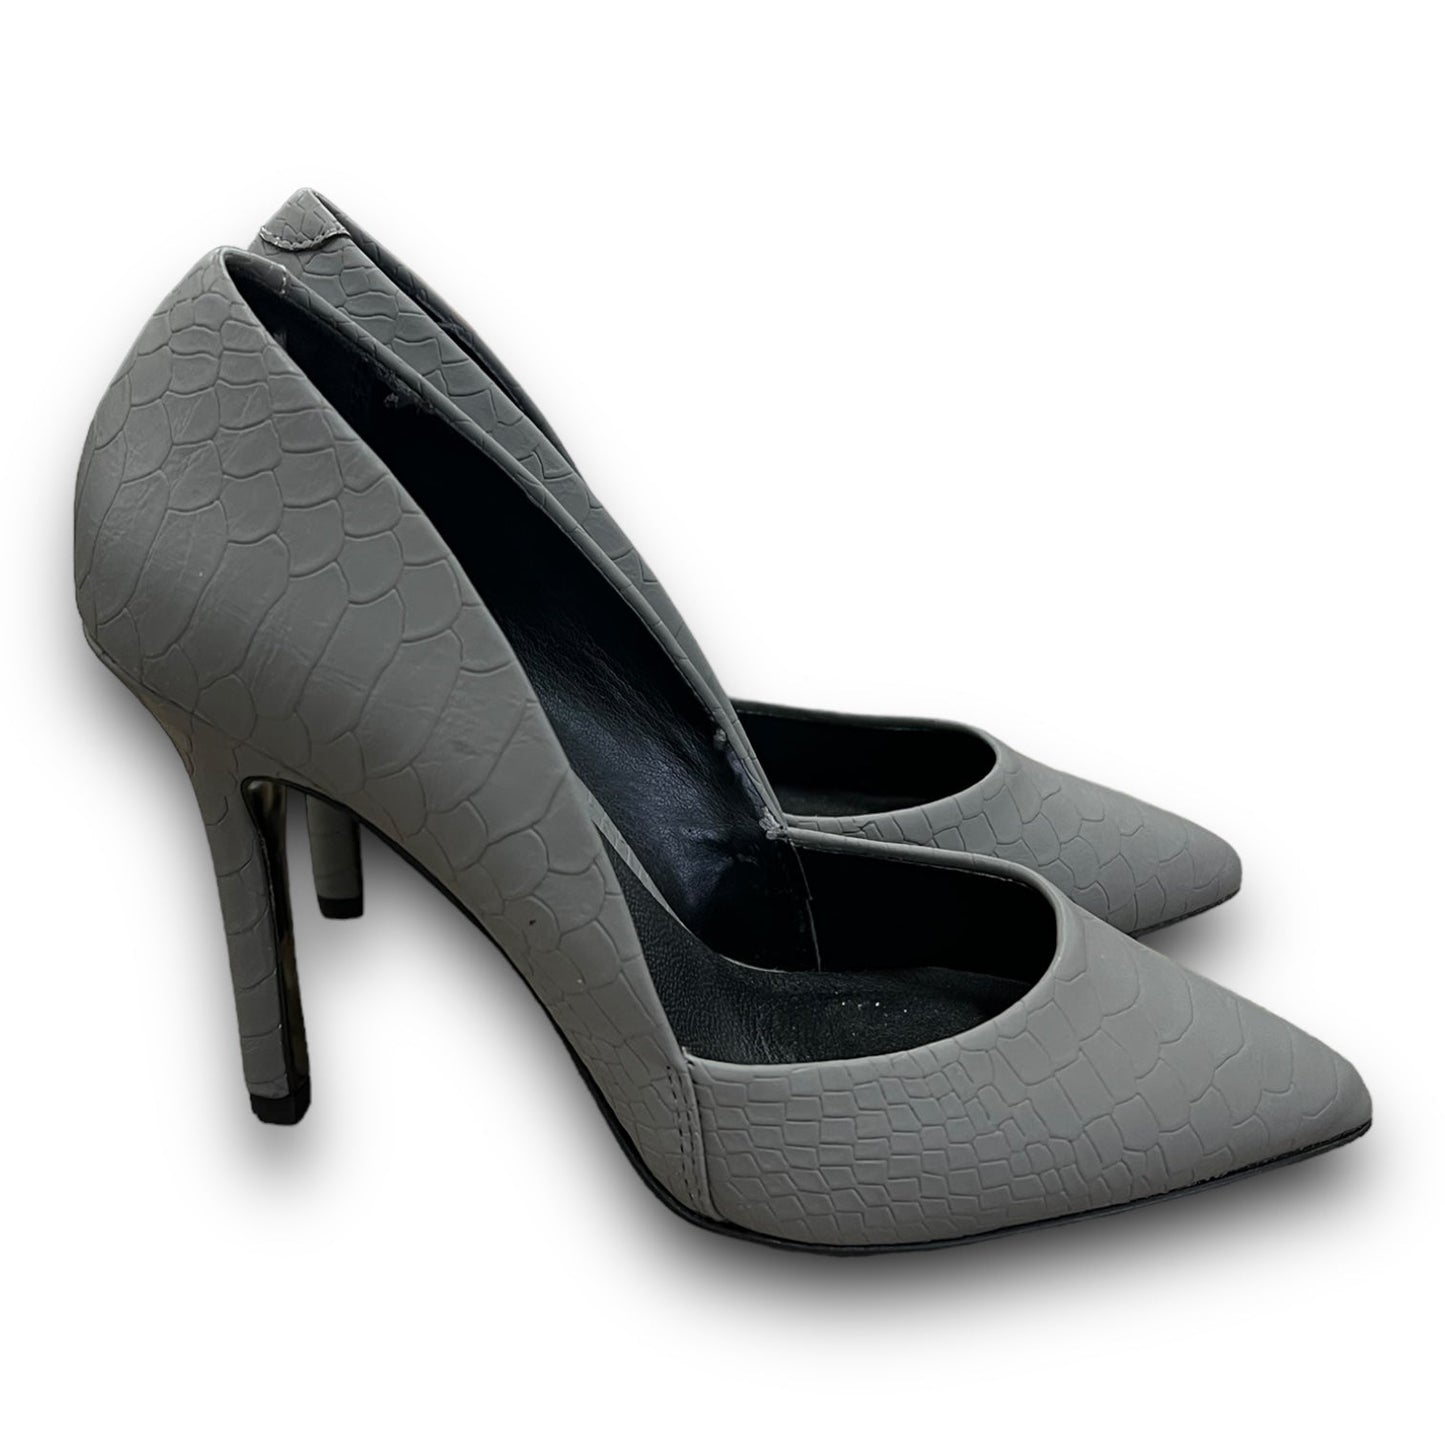 Shoes Heels Stiletto By Aldo  Size: 6.5